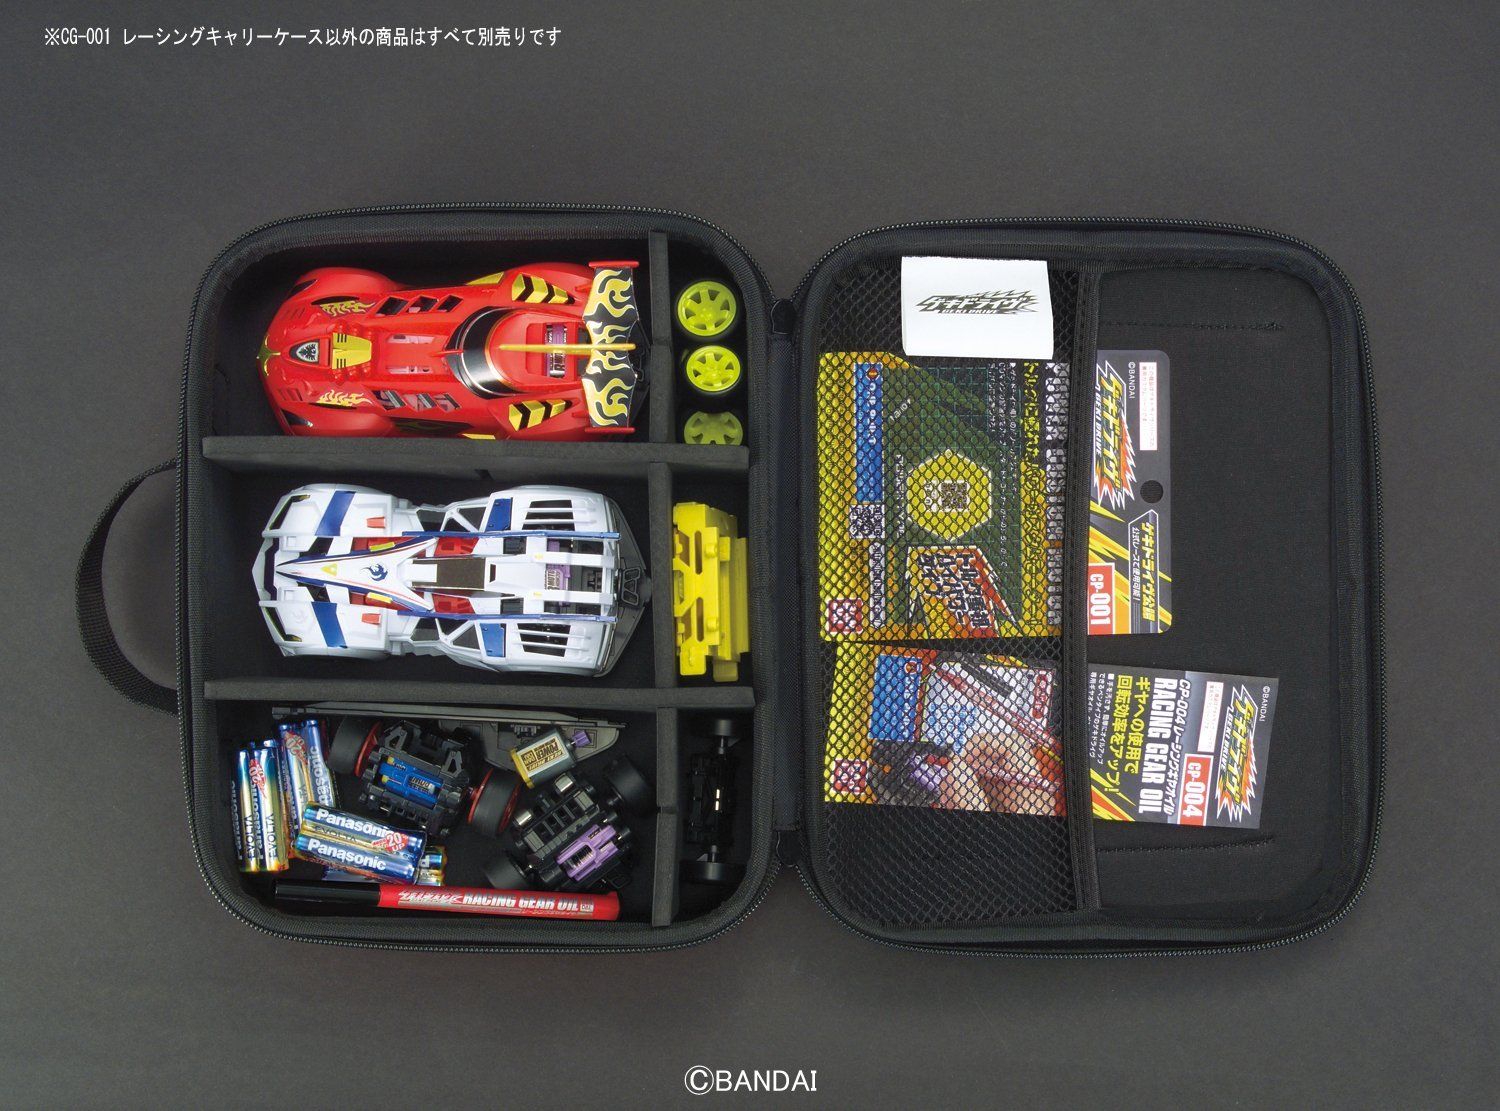 Bandai CG-001 Racing Carry Case - BanzaiHobby